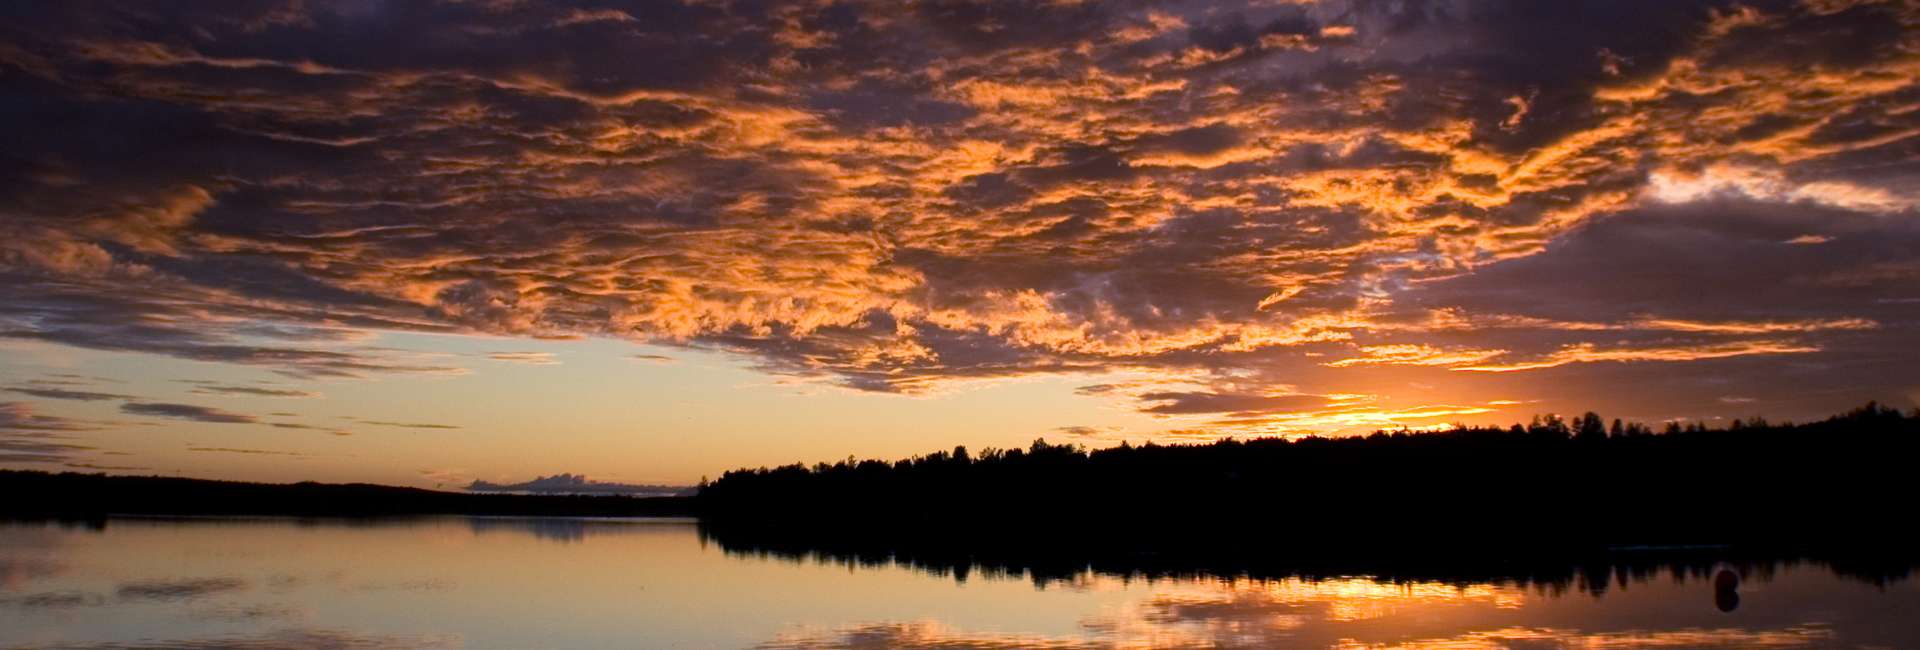 Sunset over Lake Lucille in Wasilla,AK